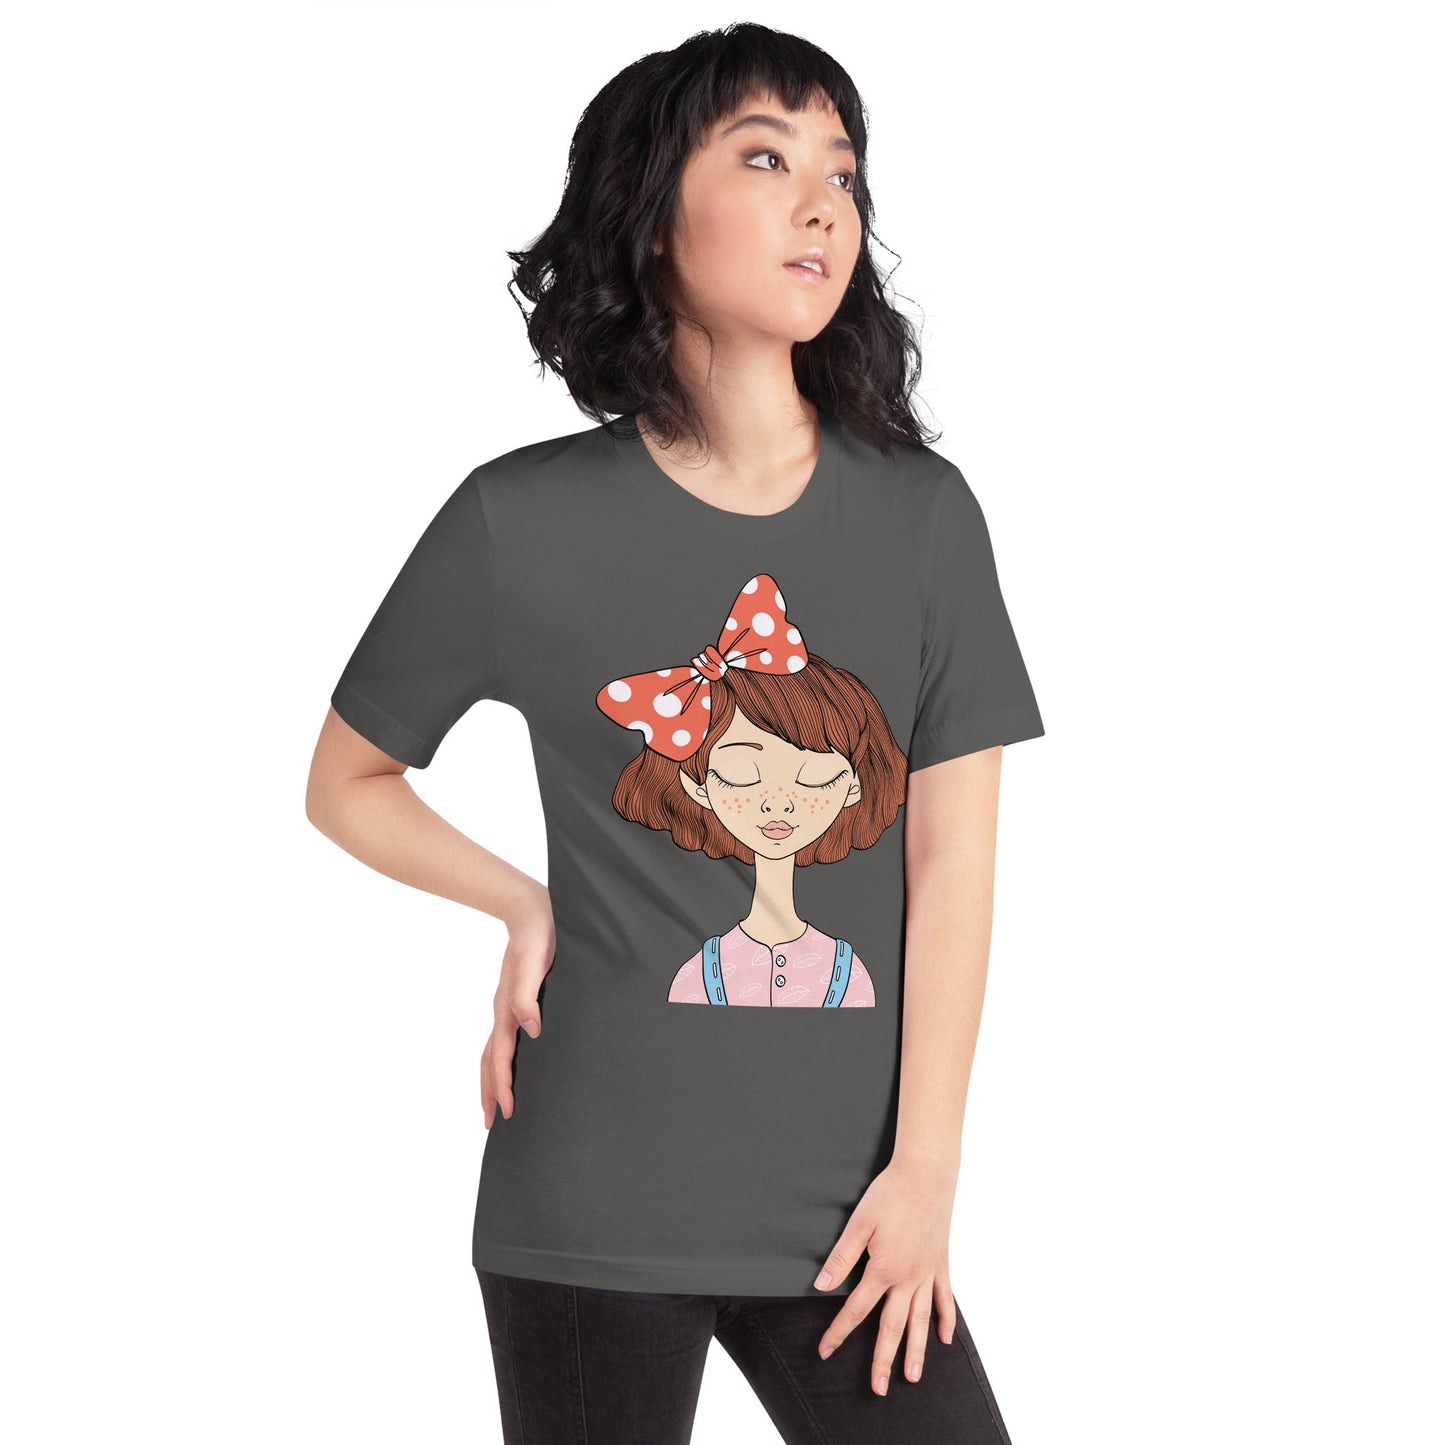 THE QUIET SOUL Women's T-Shirt - Bonotee